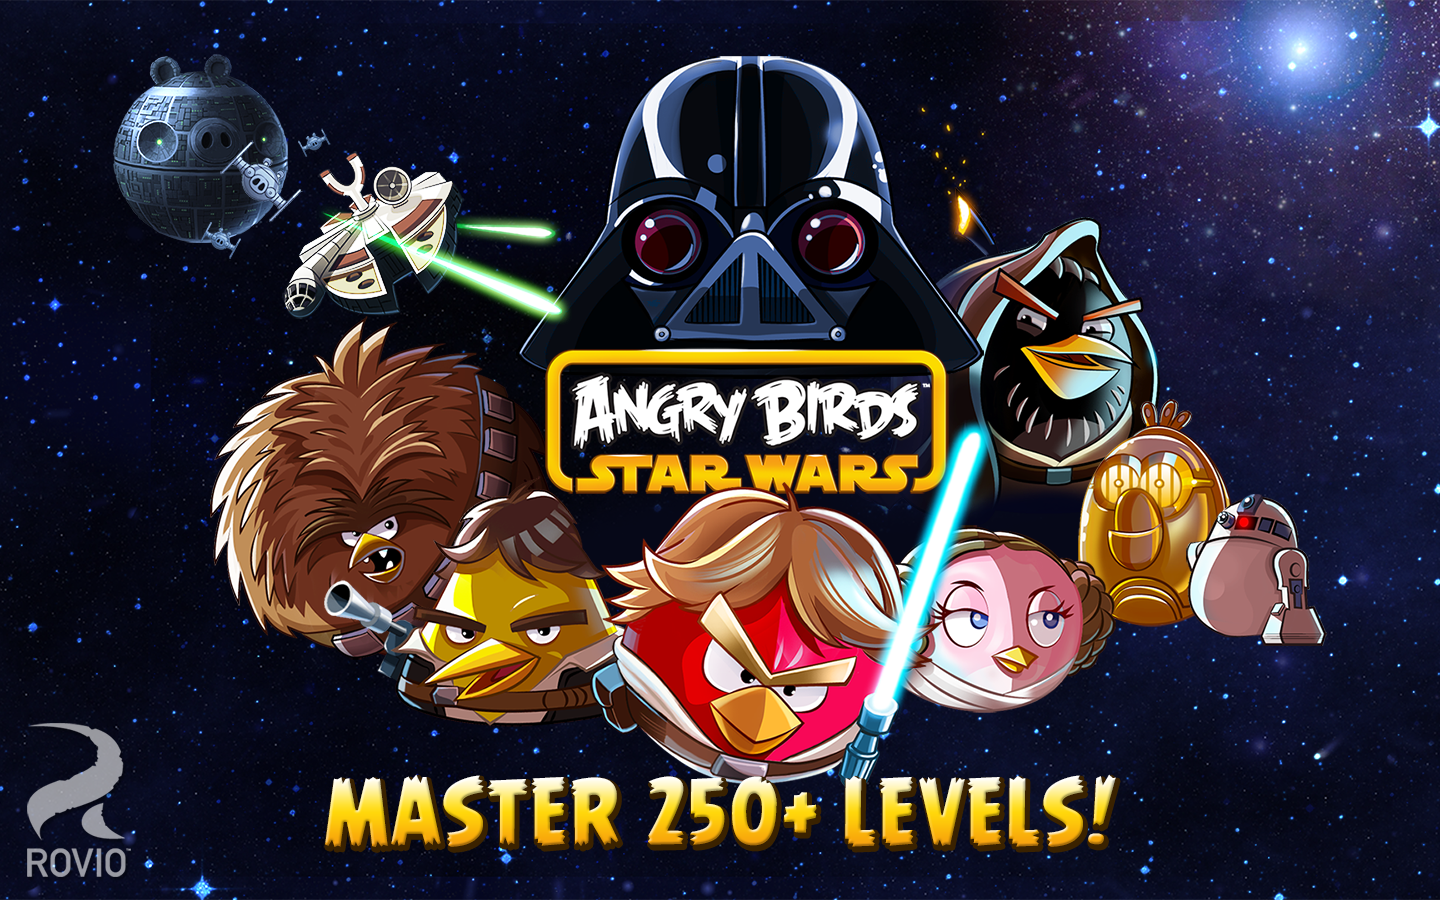 Angry Birds Star Wars QDk4FDN2tDqZVGk_TLqhjJJOt-w1kZkJ3NFJ5o4v-ZFPMrA0BvKwHxdWiSPaM3h6h7Y=h900-rw